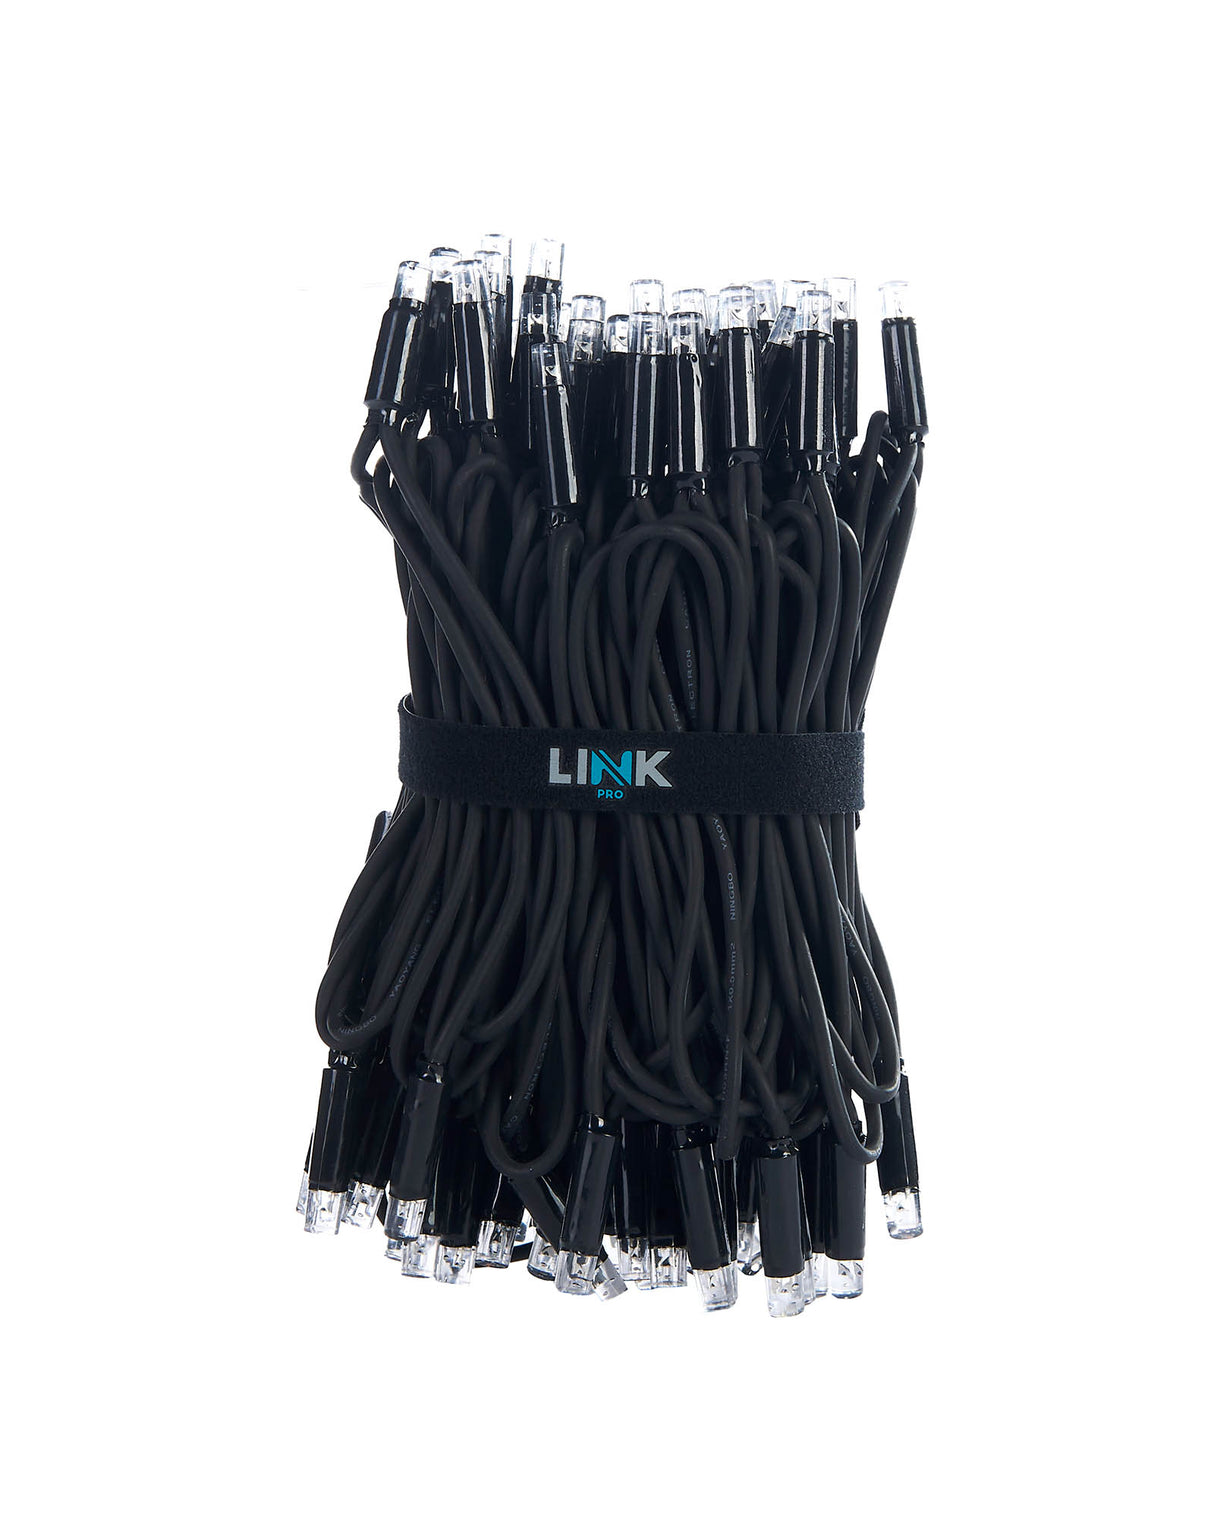 LINK PRO Twinkle LED String Lights, Black Cable, Warm White